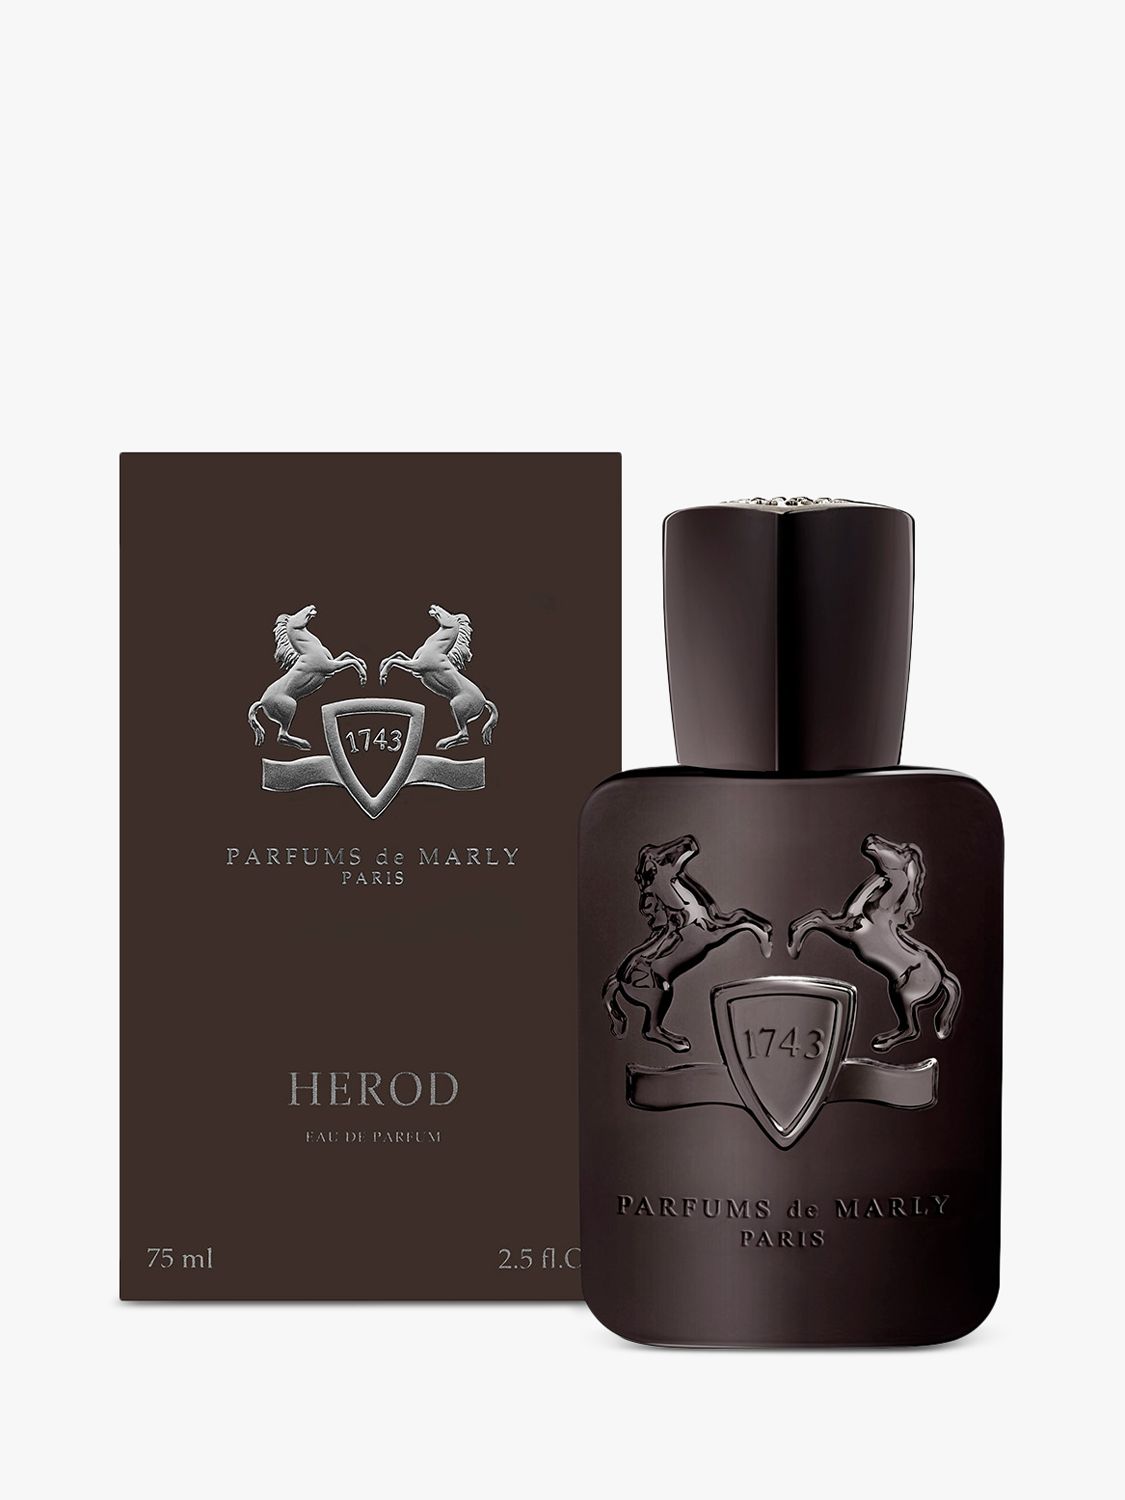 Parfums de Marly Herod Eau de Parfum, 75ml